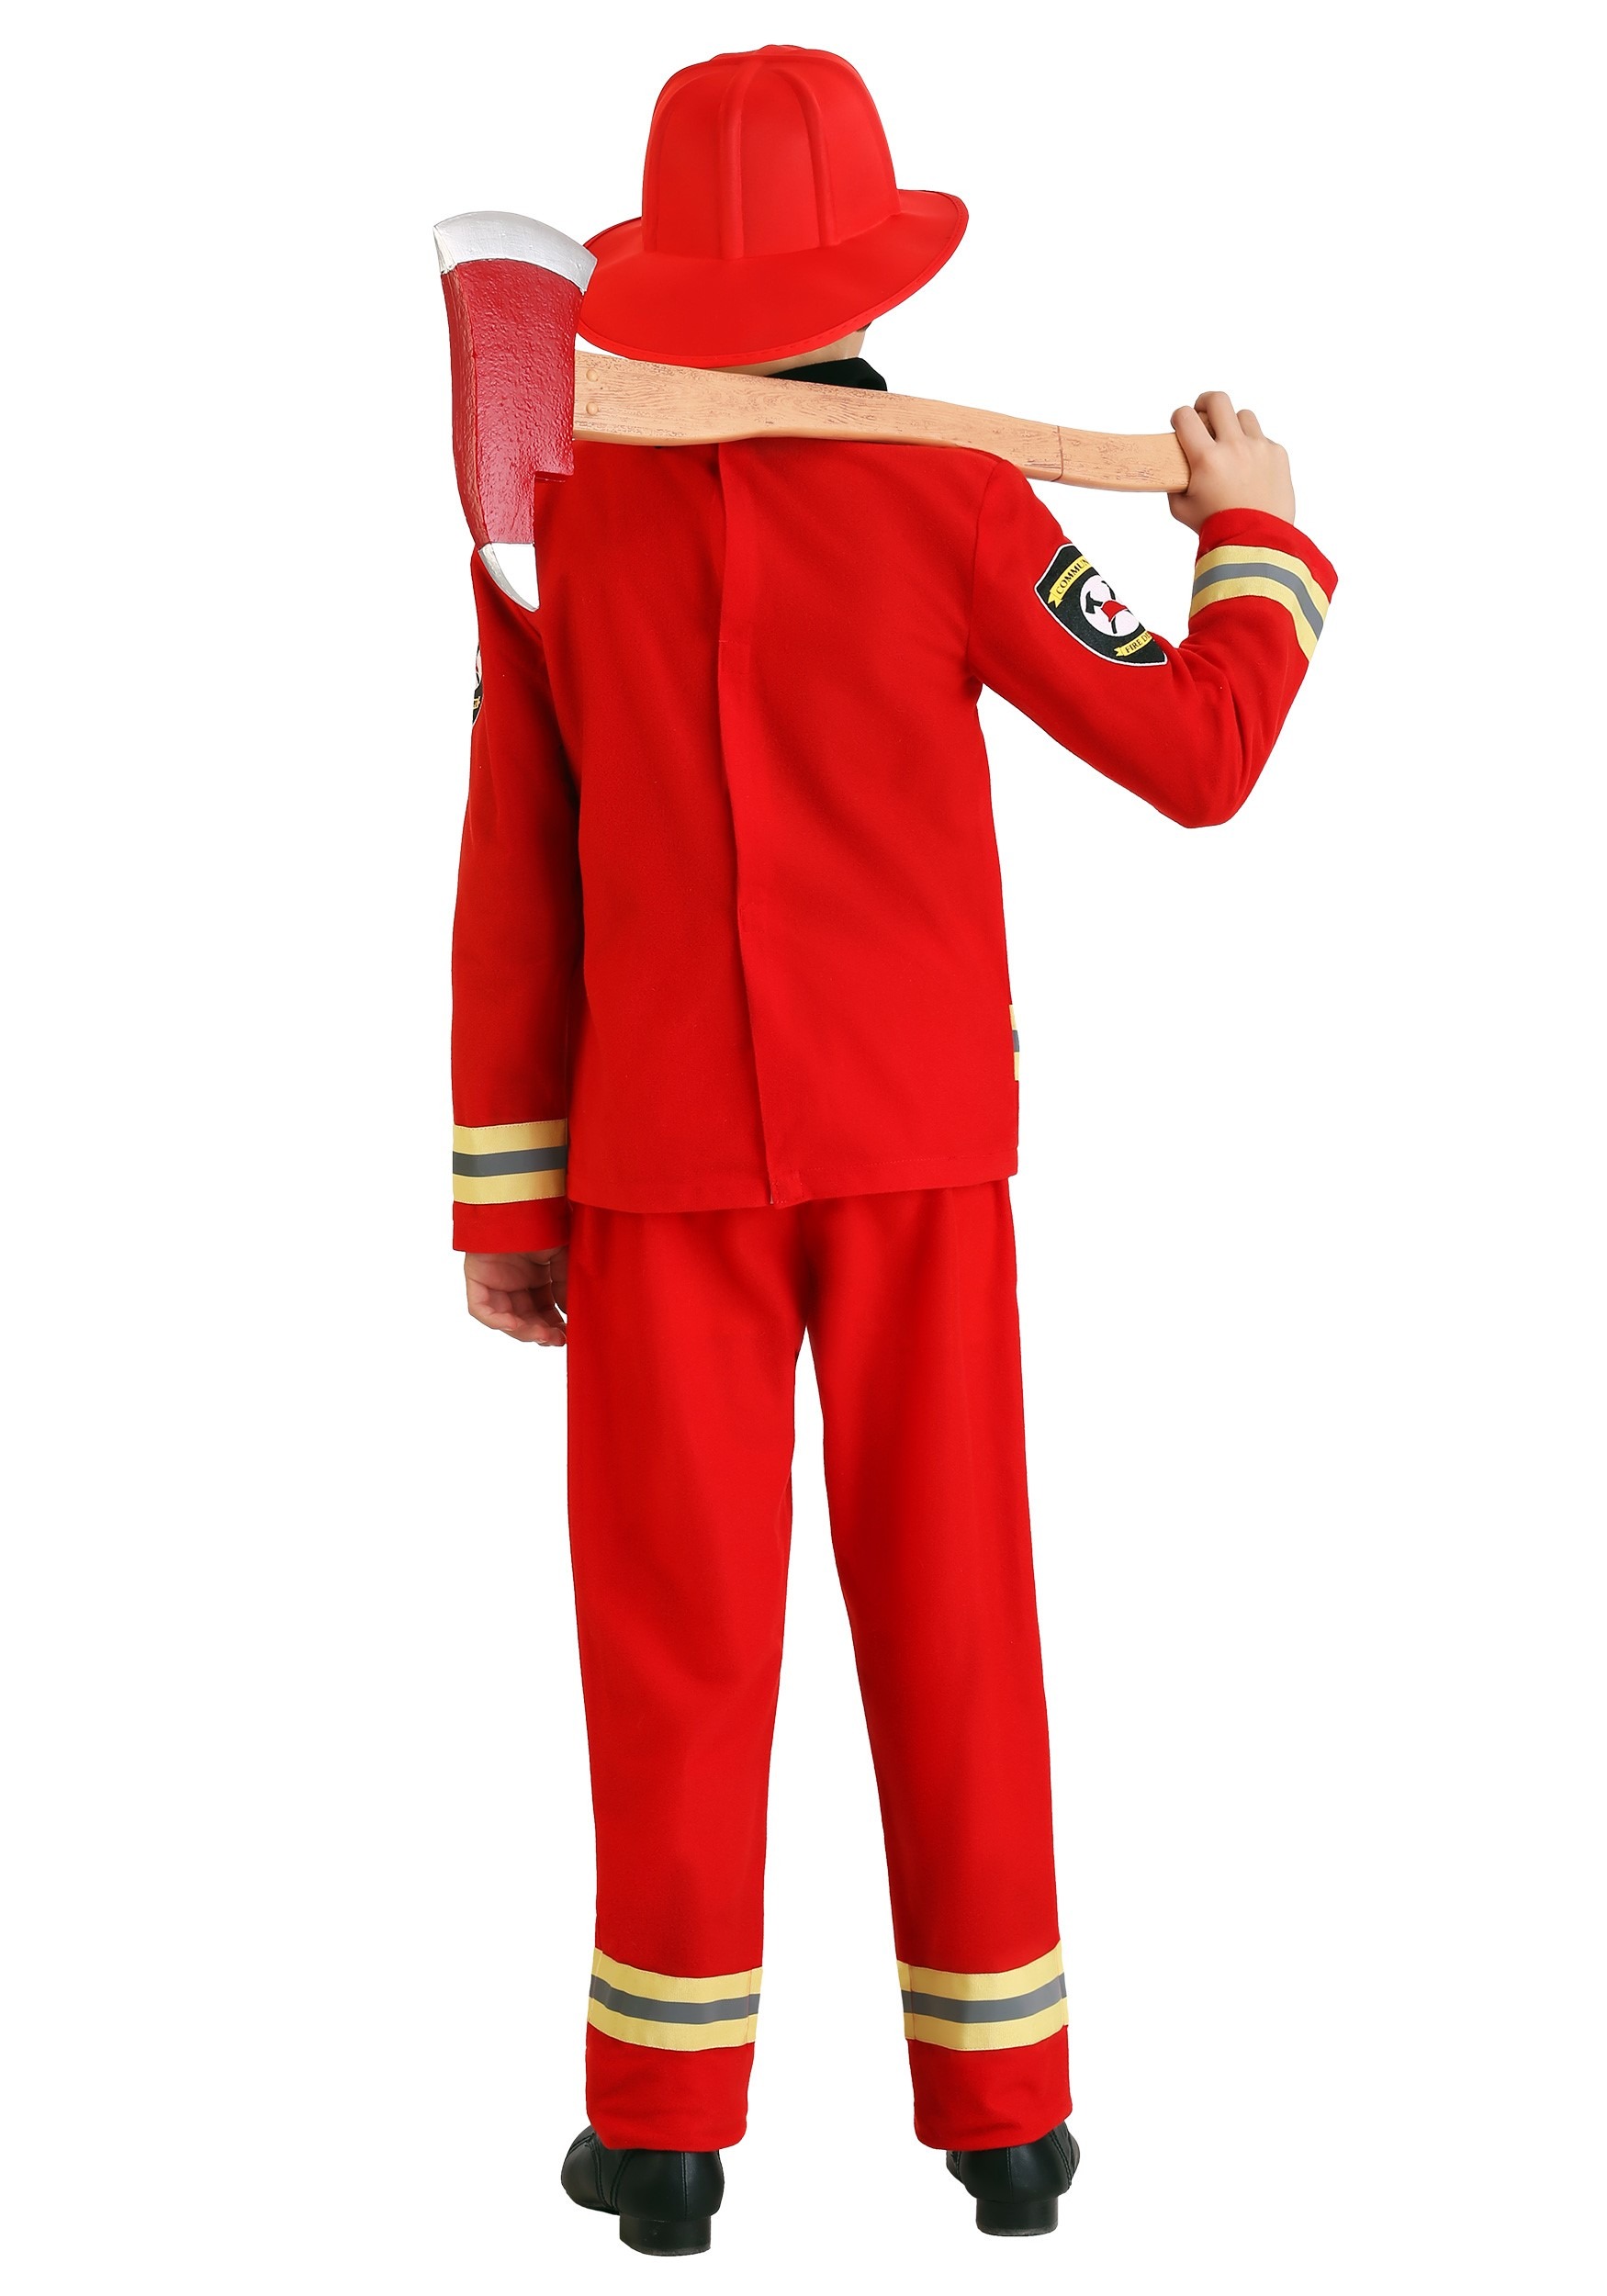 Friendly Firefighter Costume For Kids